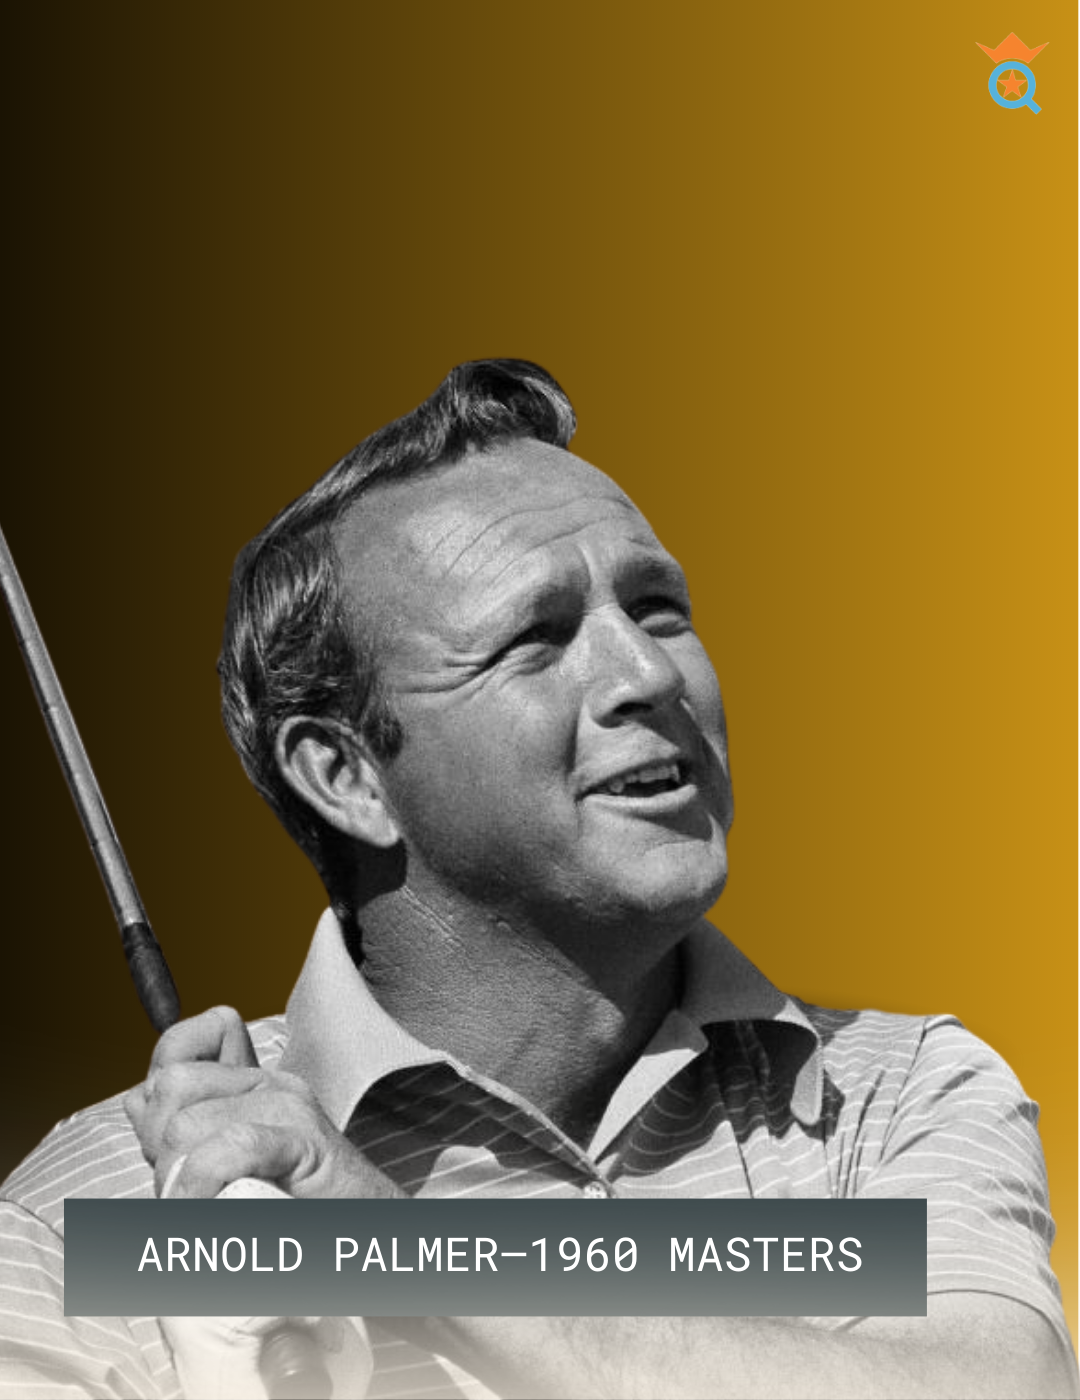 Arnold Palmer—1960 Masters